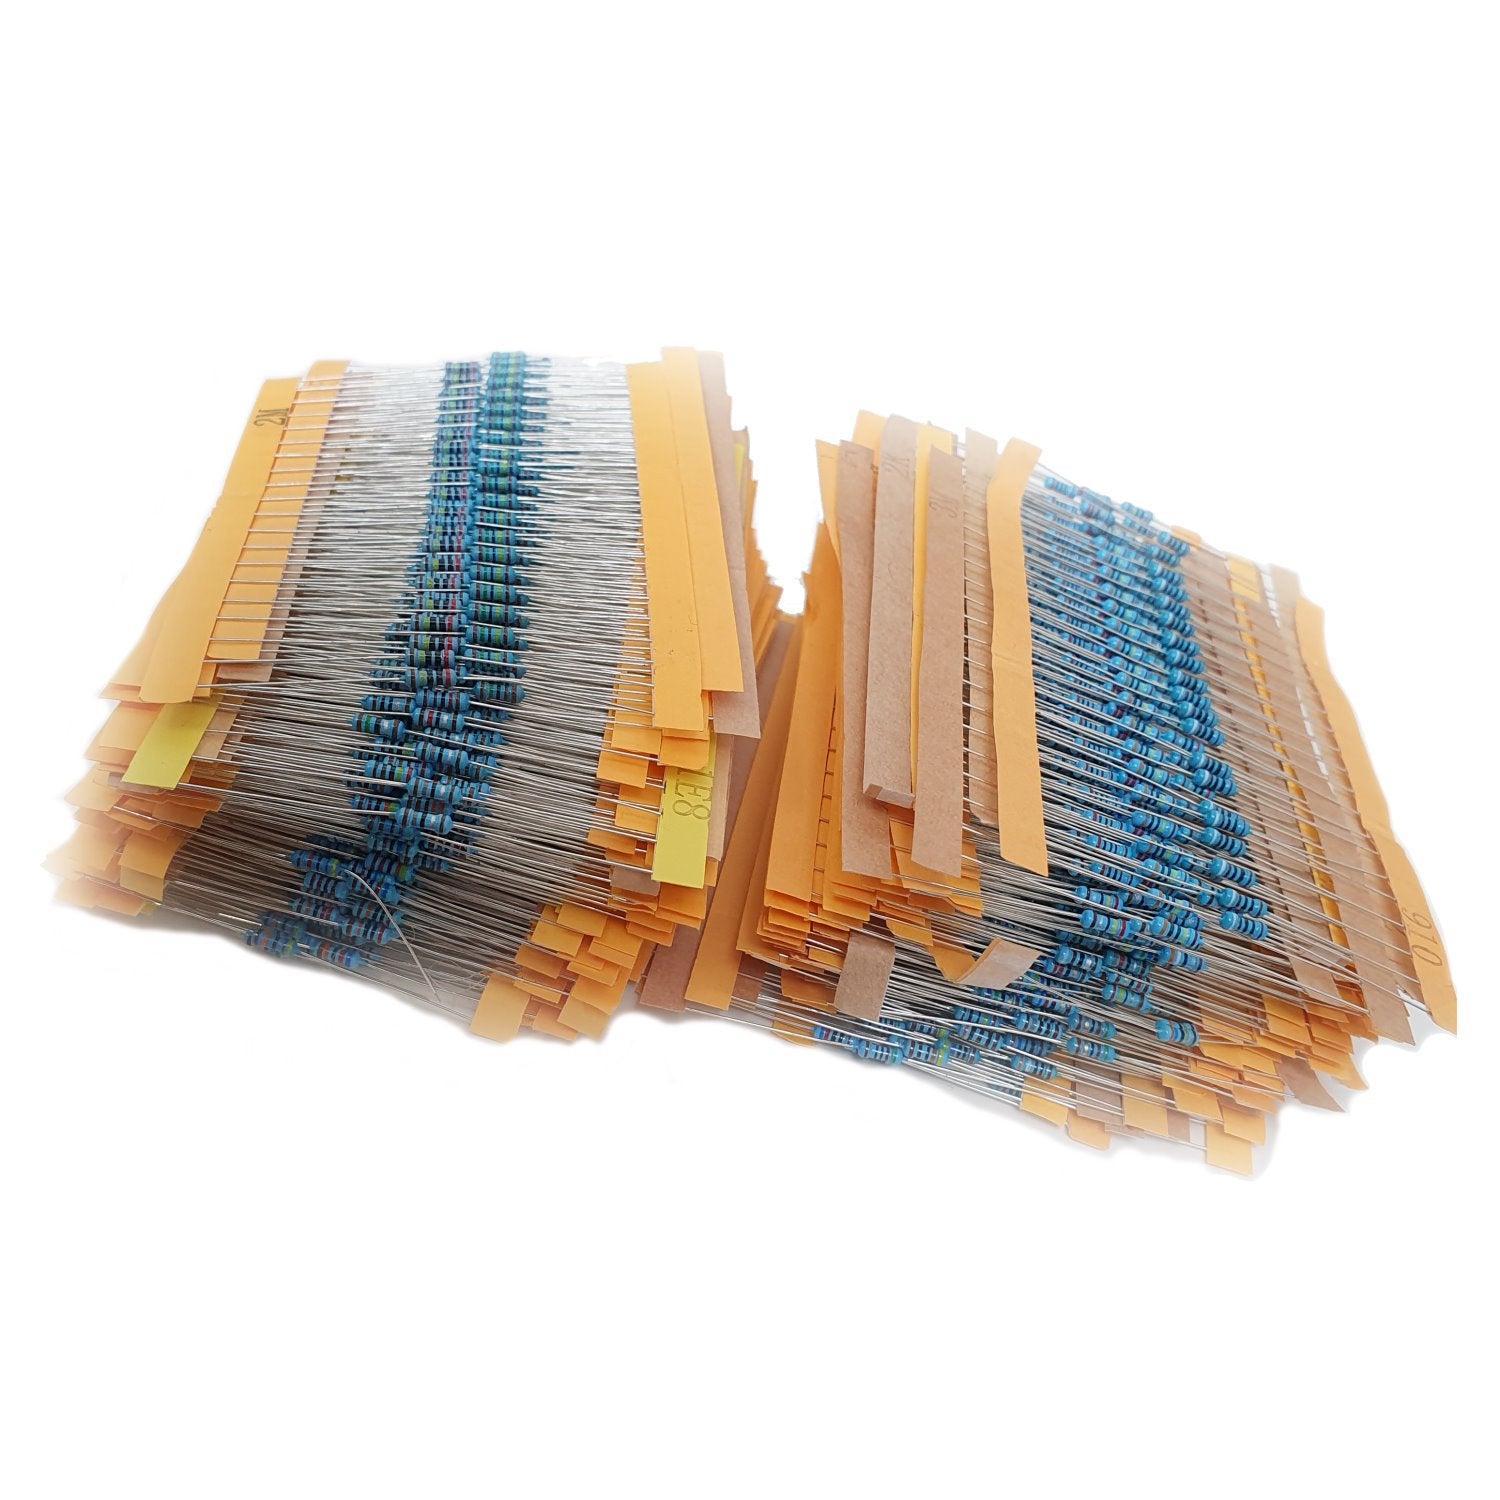 Metal film resistor kit MR25 0.25W 1% 20pcs of 130 different values = 2600 resistors